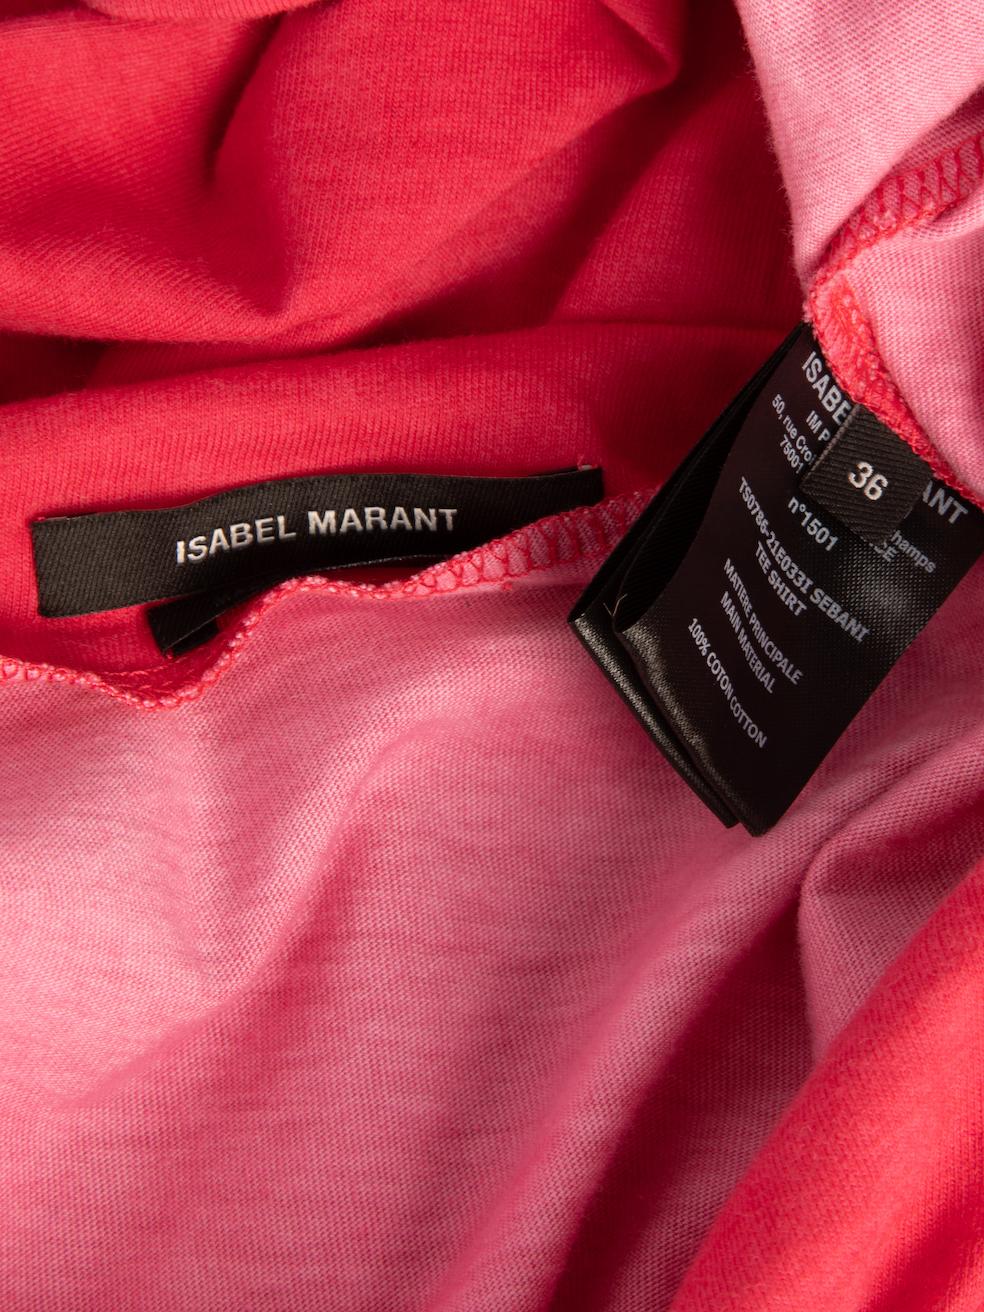 Isabel Marant Women's Pink Cap Sleeve Asymmetric Top For Sale 1